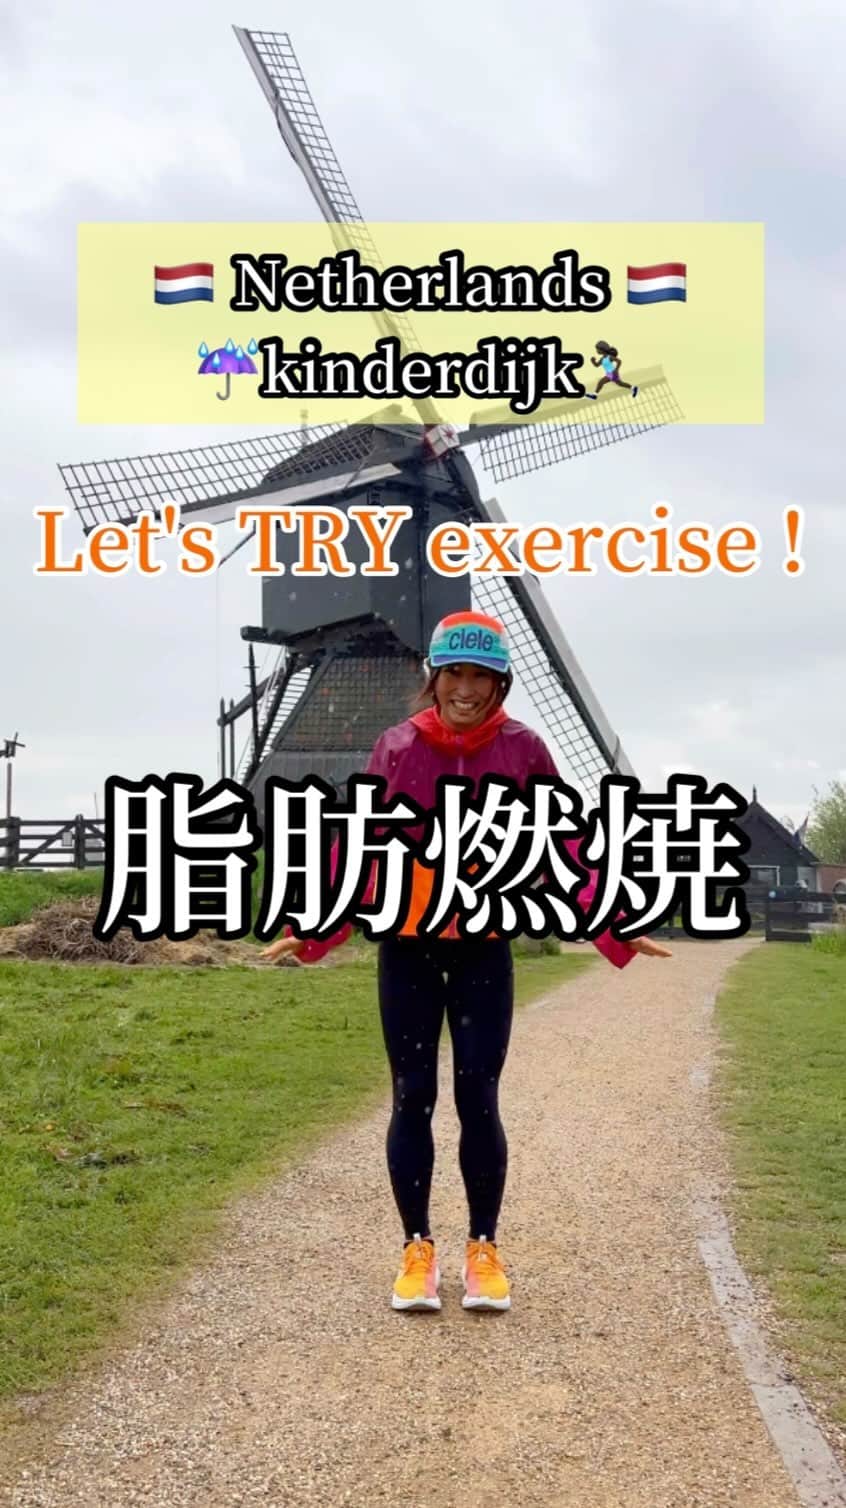 TOMOMIのインスタグラム：「Netherlands🇳🇱✨ @kinderdijk_official   Let's TRY exercise 😆🔥🔥🔥  音楽に合わせて楽しく身体を動かしていきましょう❤️ 夏までに目指せ！ #美ボディ 👙✨  Let's try‼︎ Healthy body makeing👙✨  渋谷駅 徒歩5分 会員制パーソナルジム CYBERJAPAN®︎GYM 🉐半額モニター募集中❤️ @cyberjapangym   #Netherlands #kinderdijk  #world #worldheritagesite #trip #castle  #workout #training #running #trailrunning #marathon #diet #body  #渋谷 #パーソナルジム #CYBERJAPAN GYM 🉐半額 #モニター募集  #ボディメイク #ダイエット #脂肪燃焼 #筋トレ #筋トレ女子 #トレーニング」